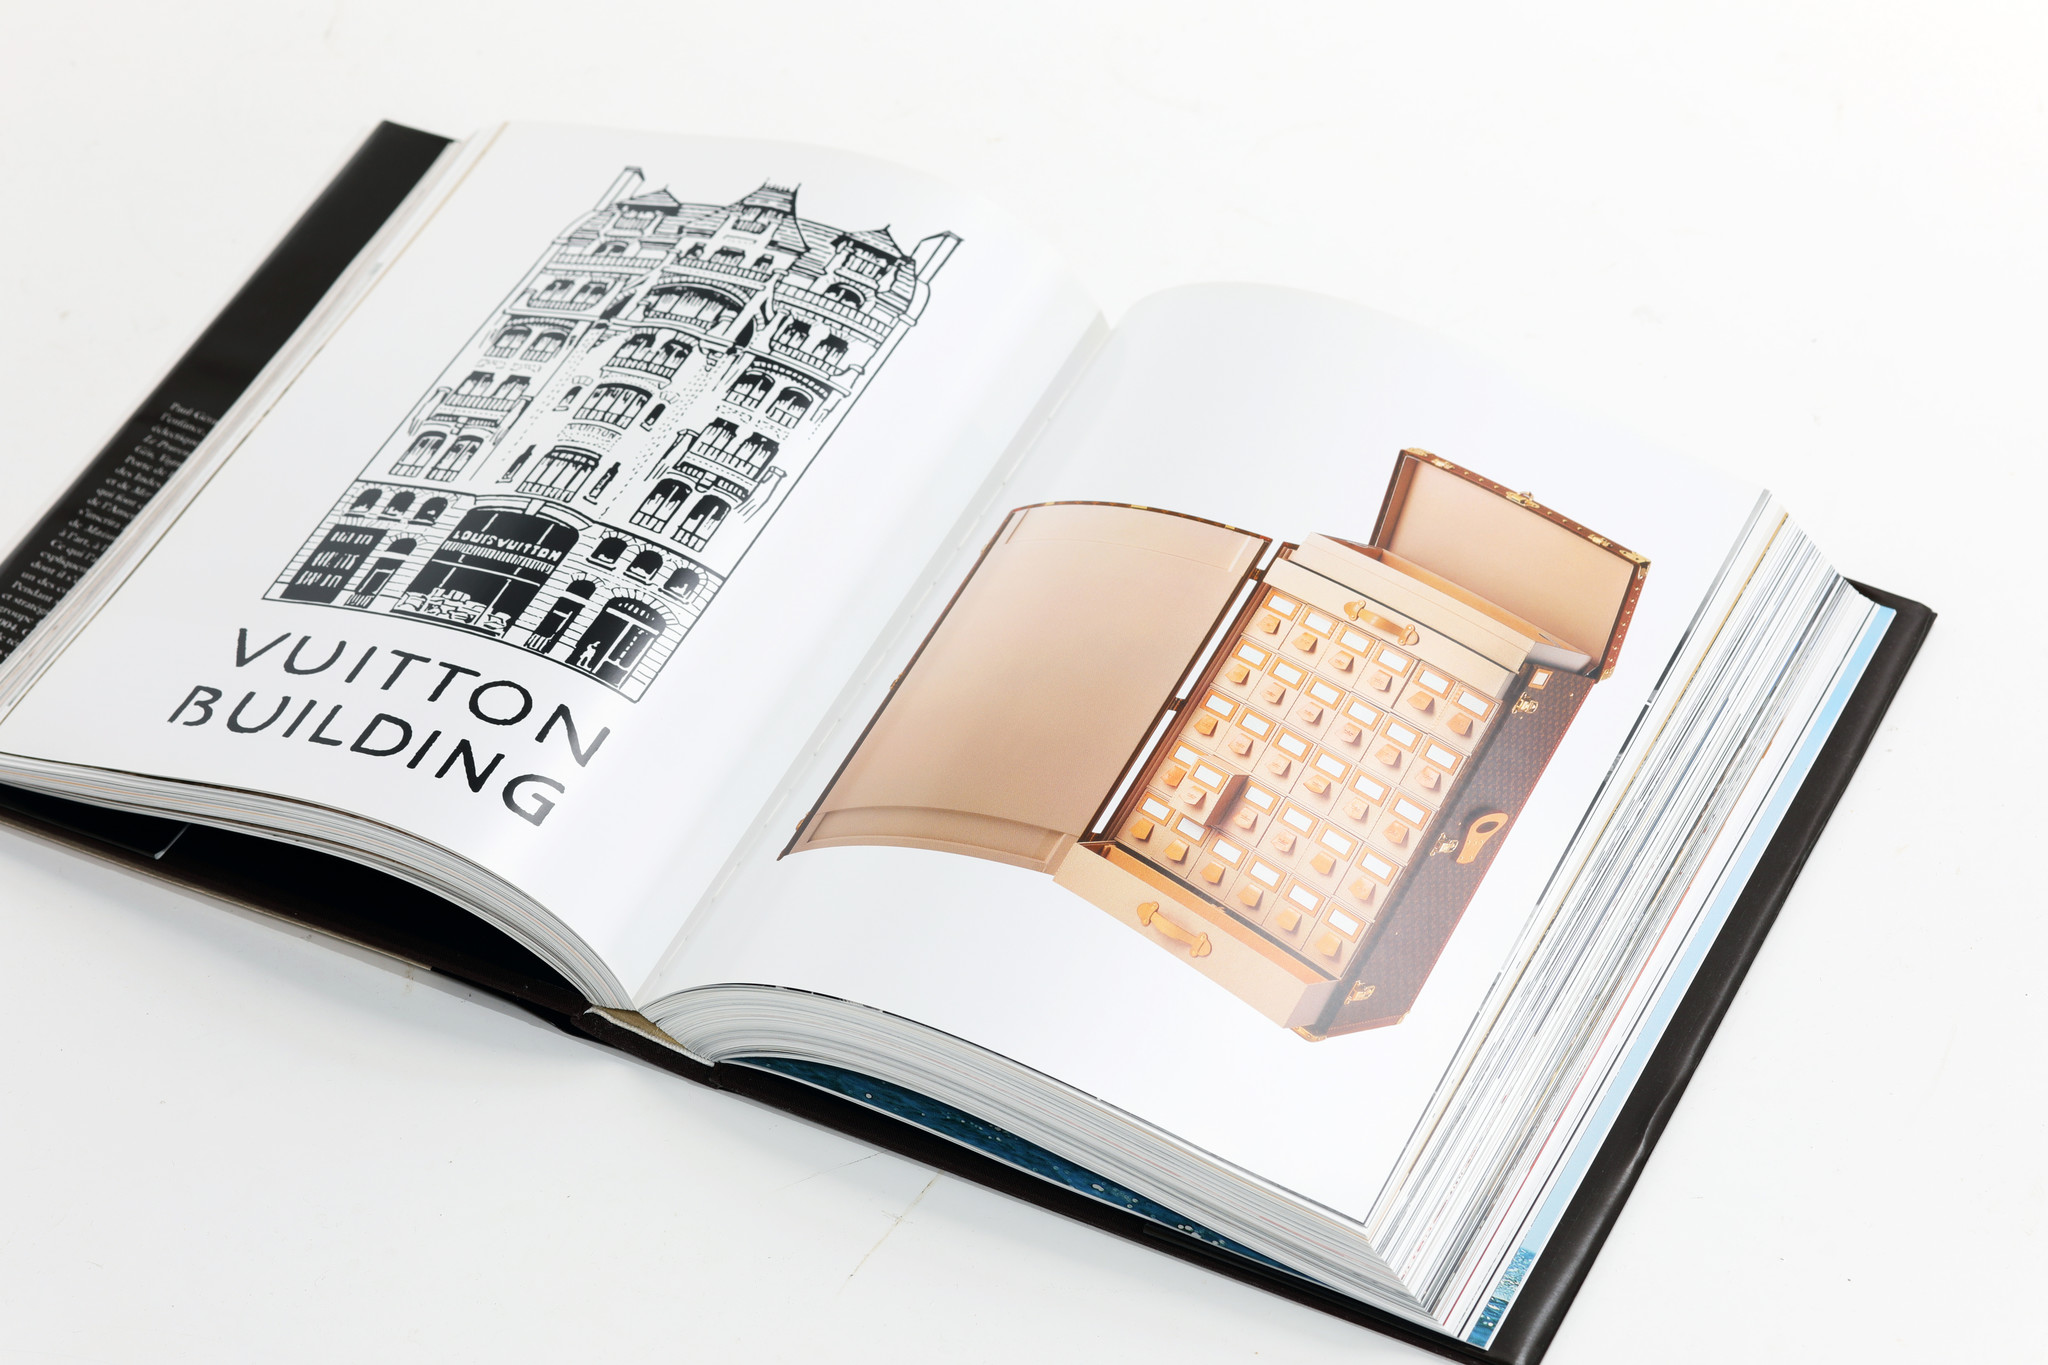 Louis Vuitton Book "The birth of modern luxury", 2004